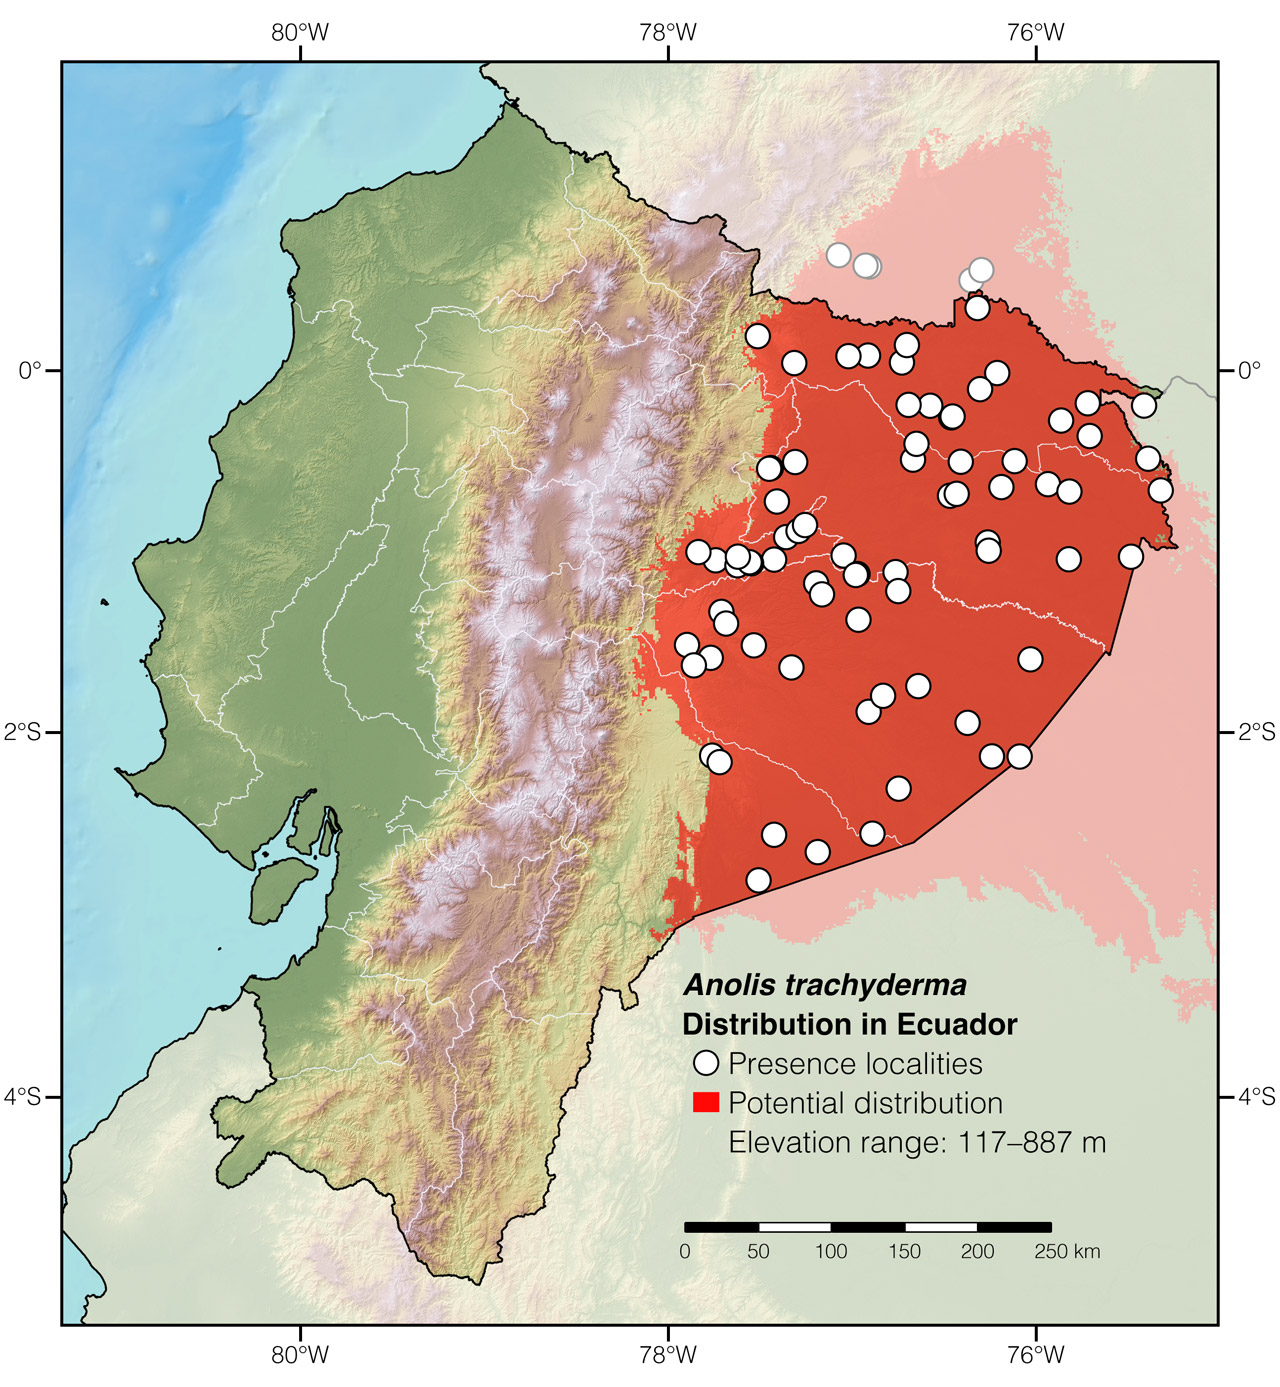 Distribution of Anolis trachyderma in Ecuador